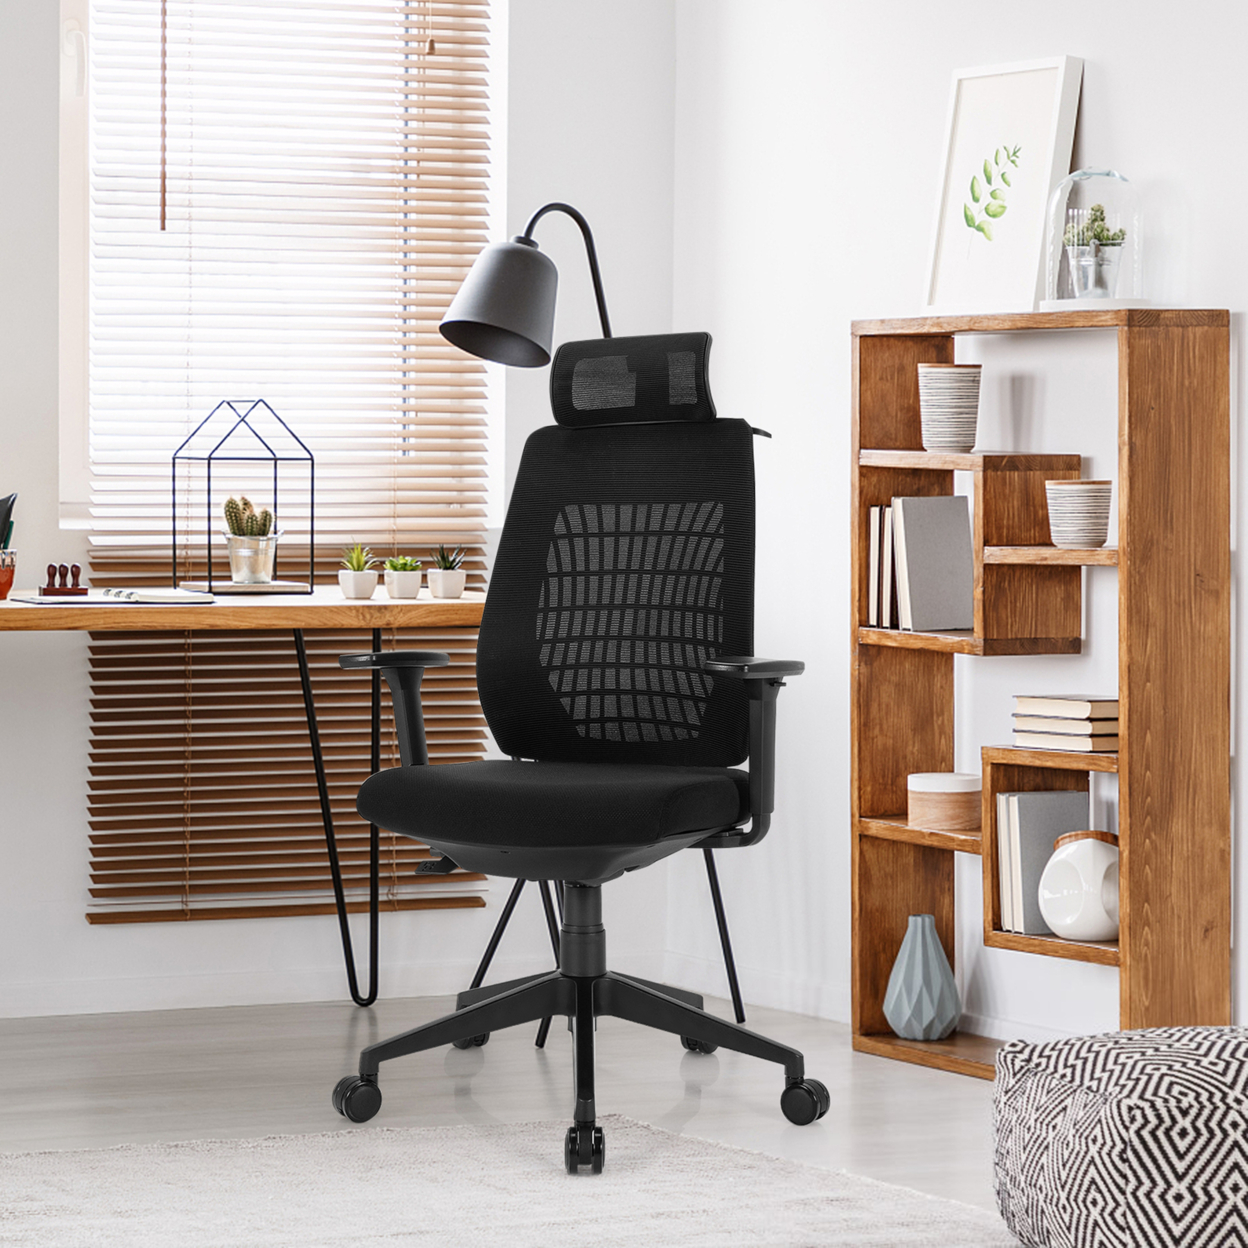 Ergonomic Mesh Office Chair High Back Swivel Executive Chair W/ 3D Armrests